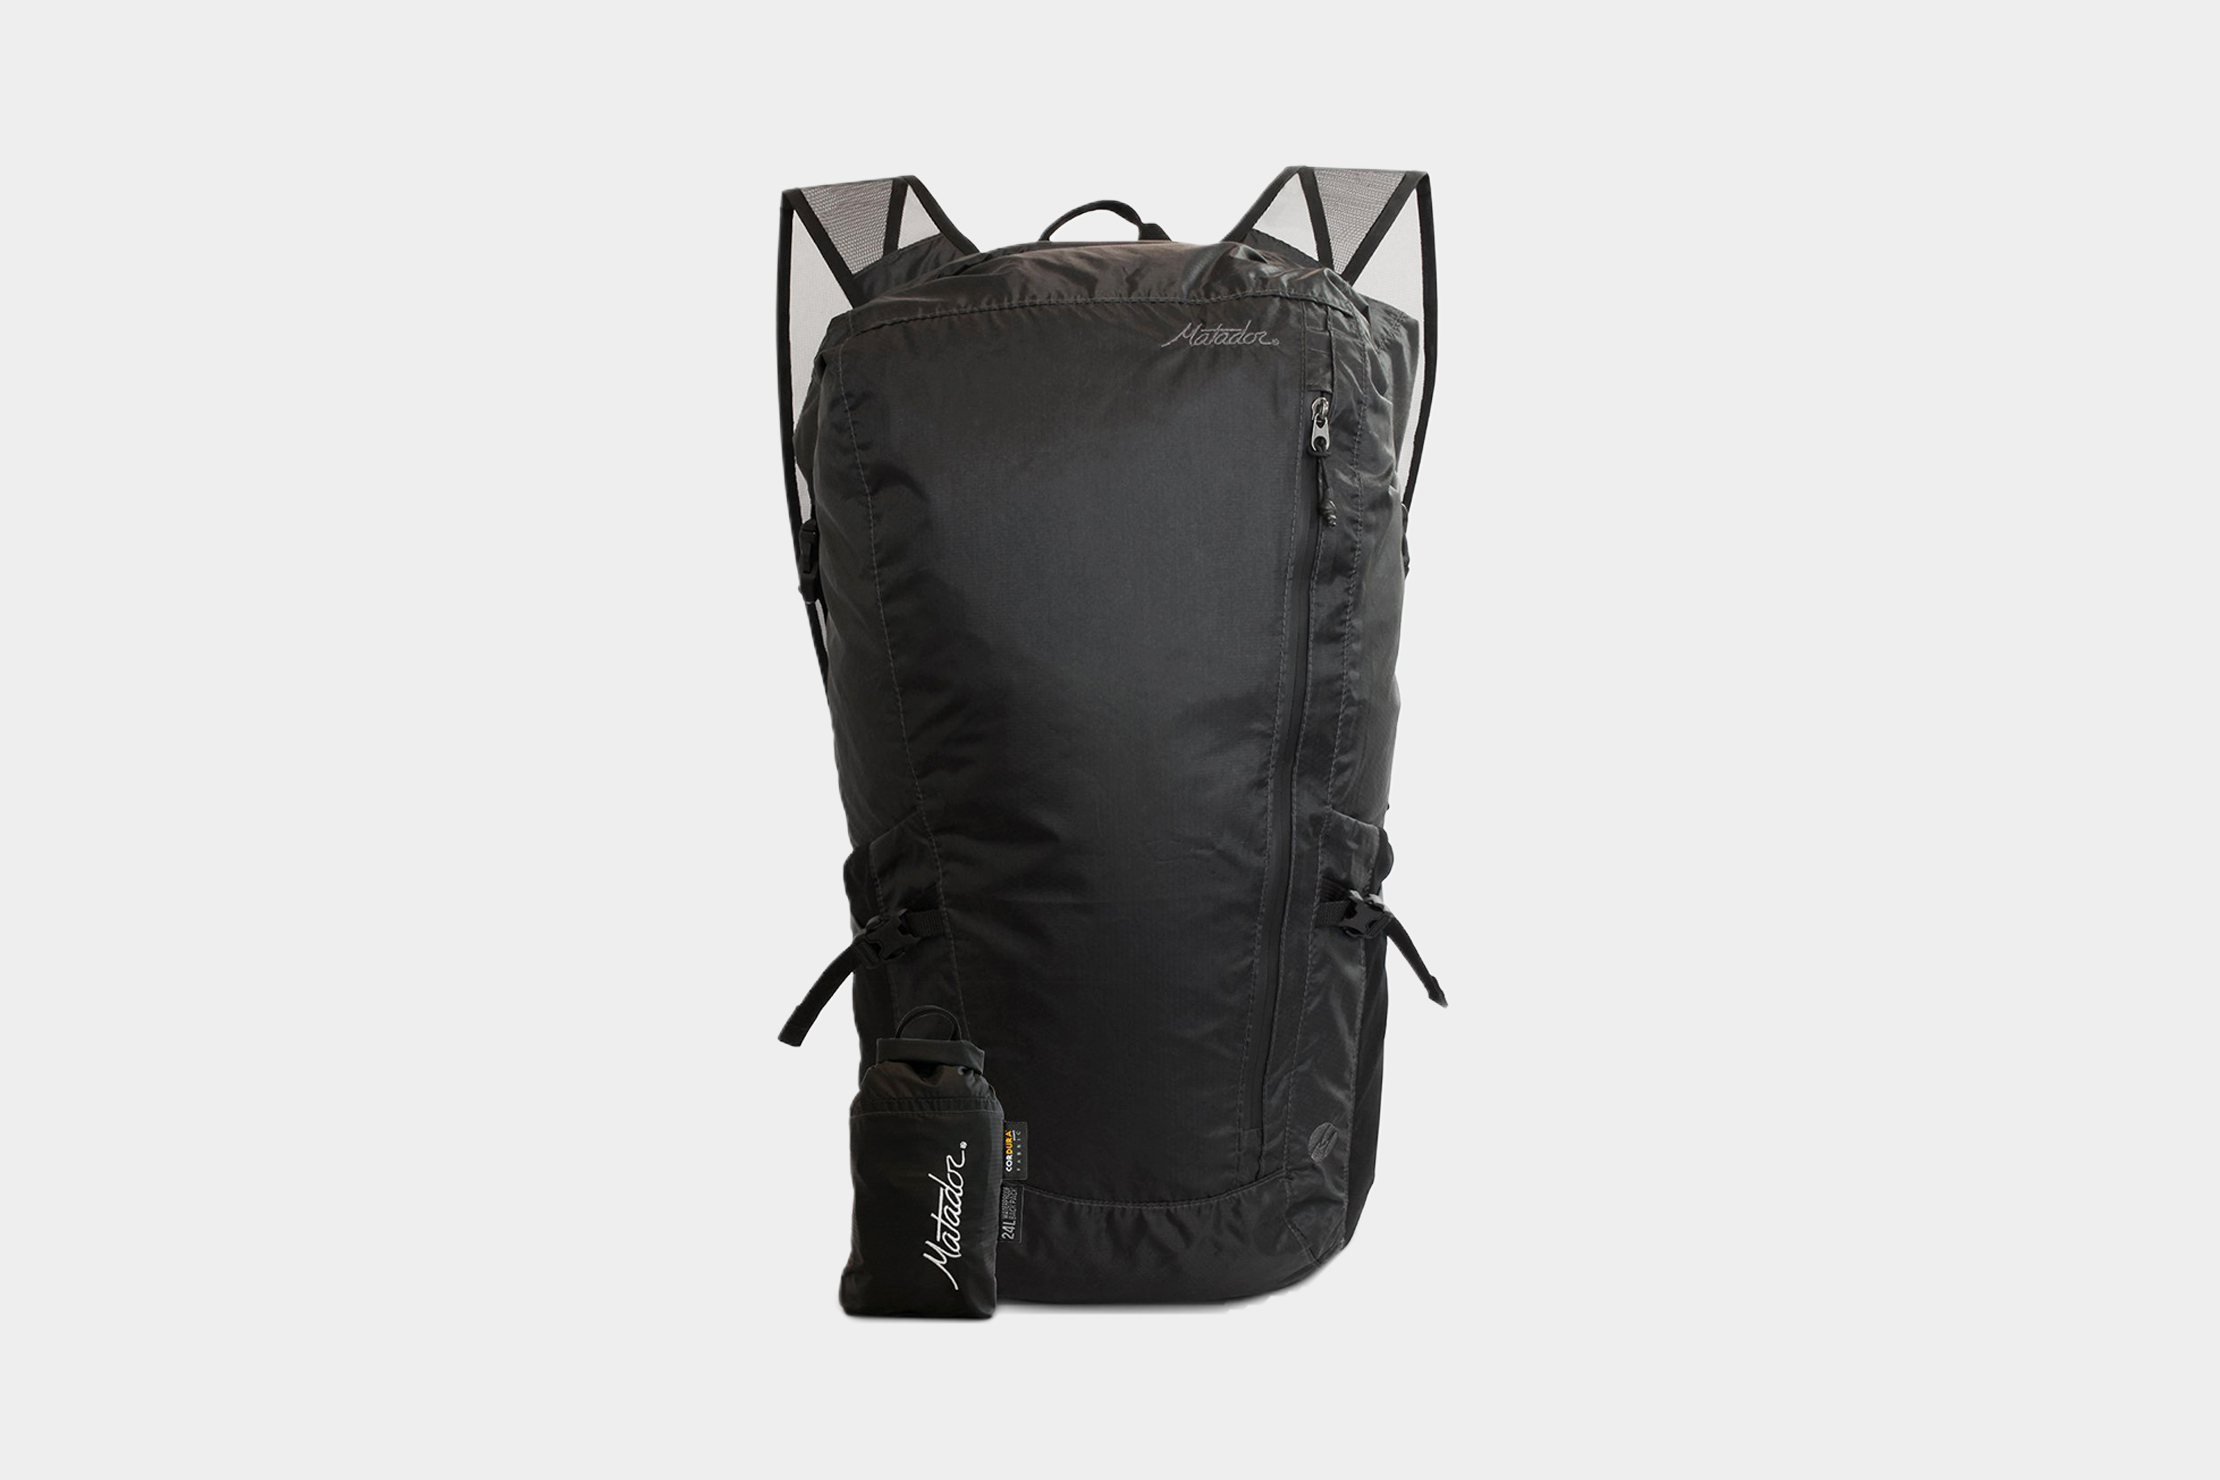 matador Freerain24 backpack